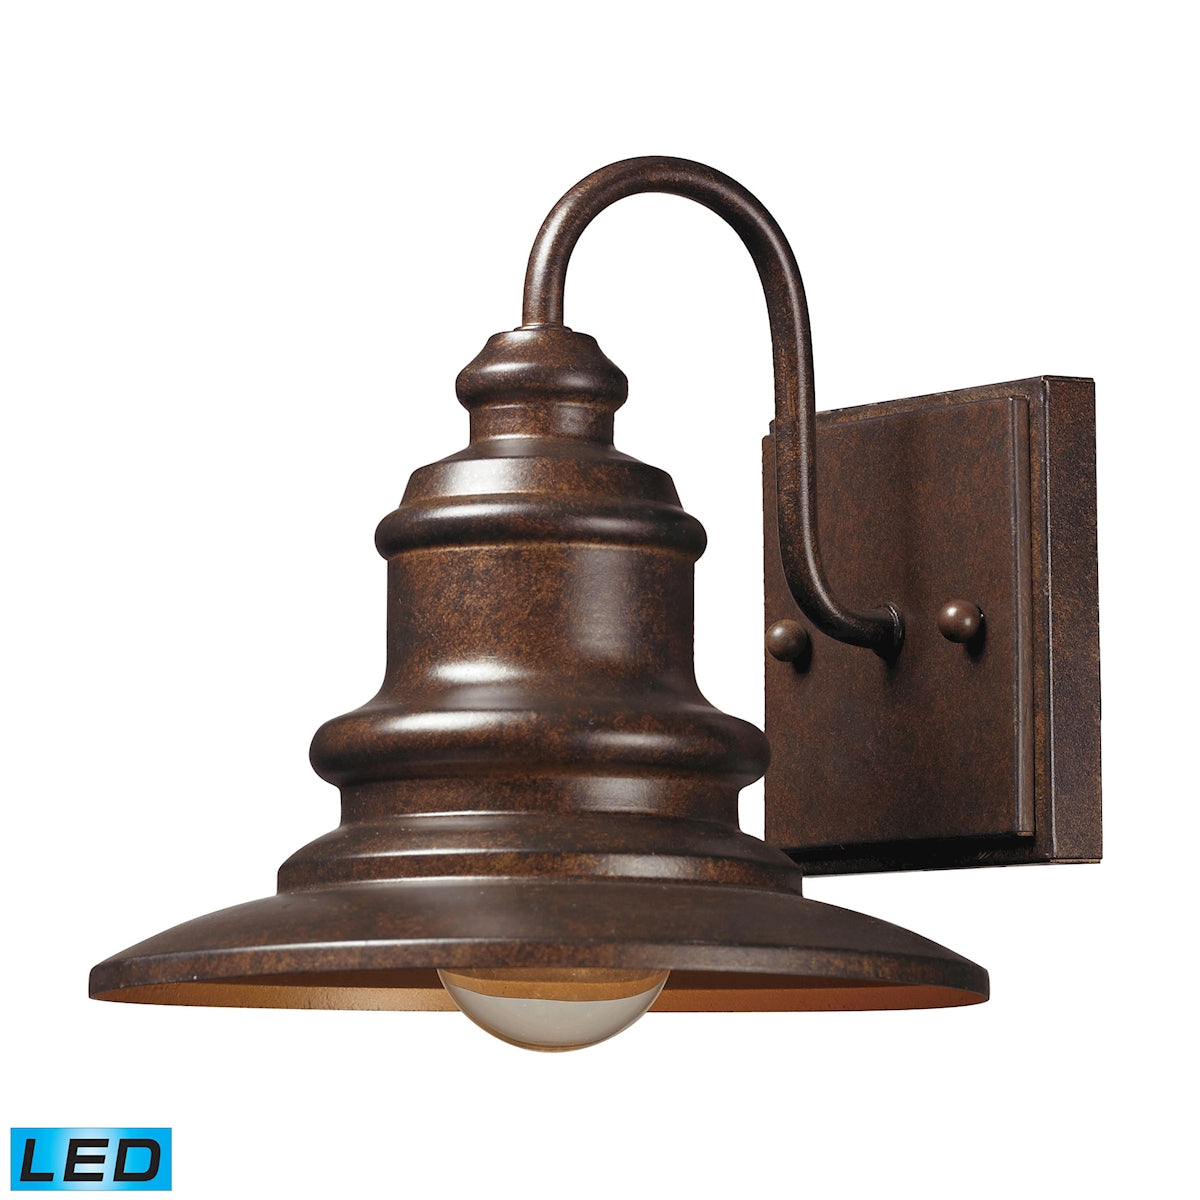 ELK Lighting 47010/1-LED Marina 1-Light Outdoor Wall Lamp in Hazelnut Bronze - Includes LED Bulb